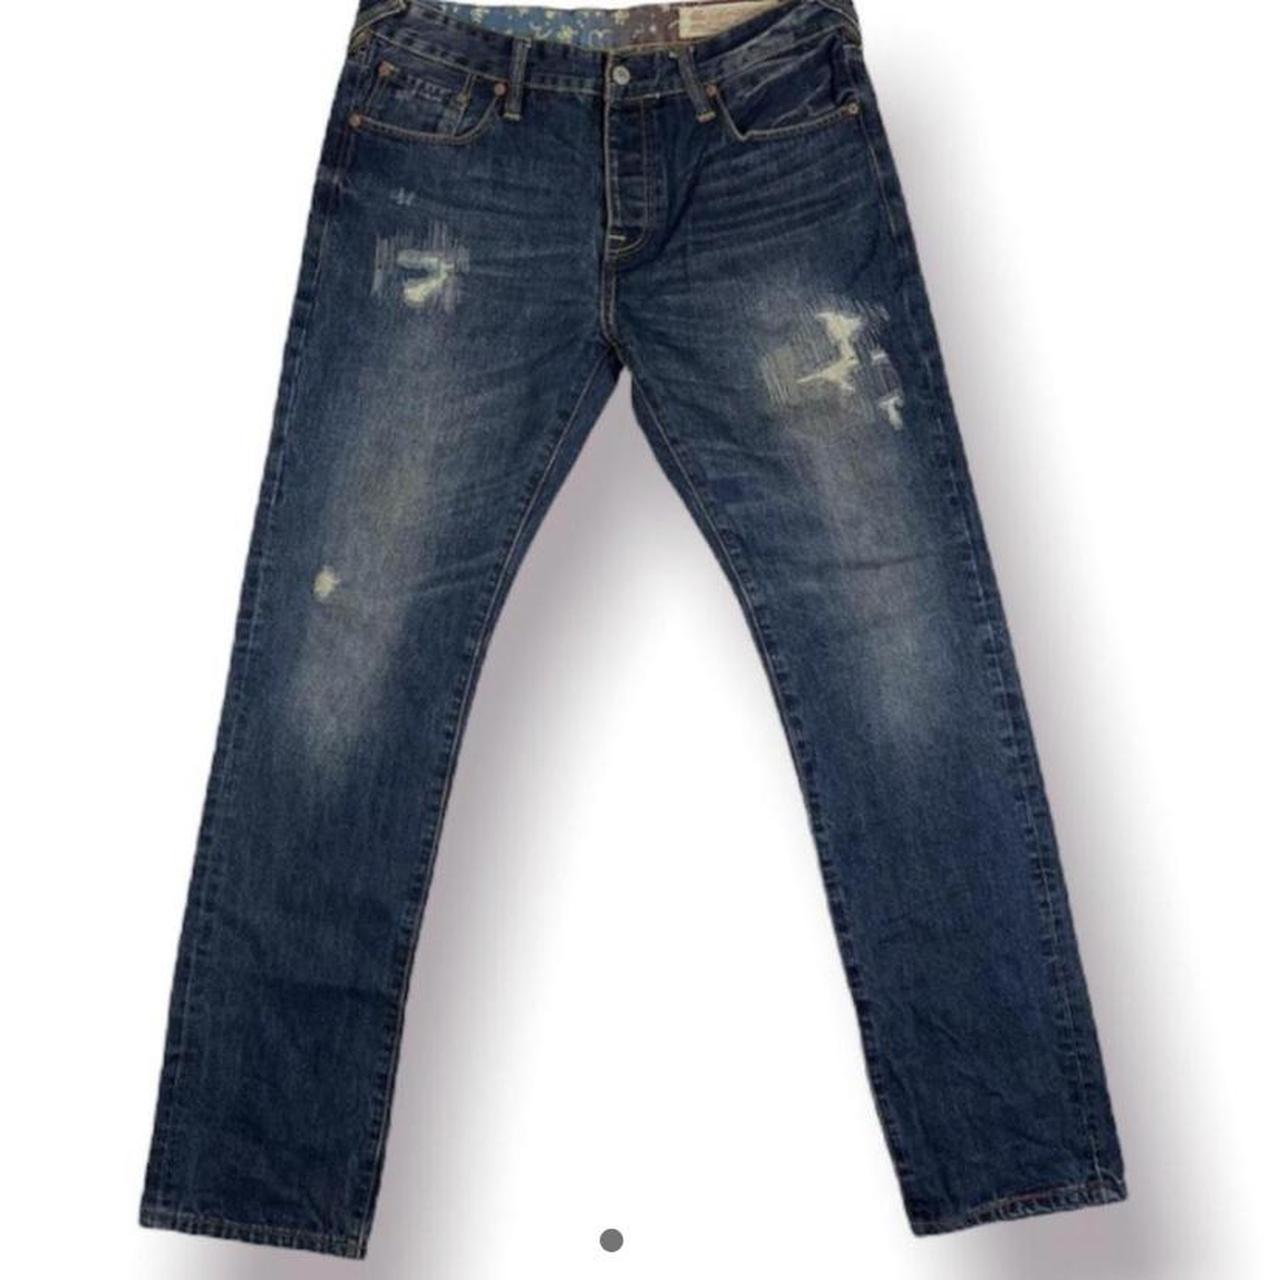 Evisu Daicock Jeans- rare piece and colourway. Worn... - Depop